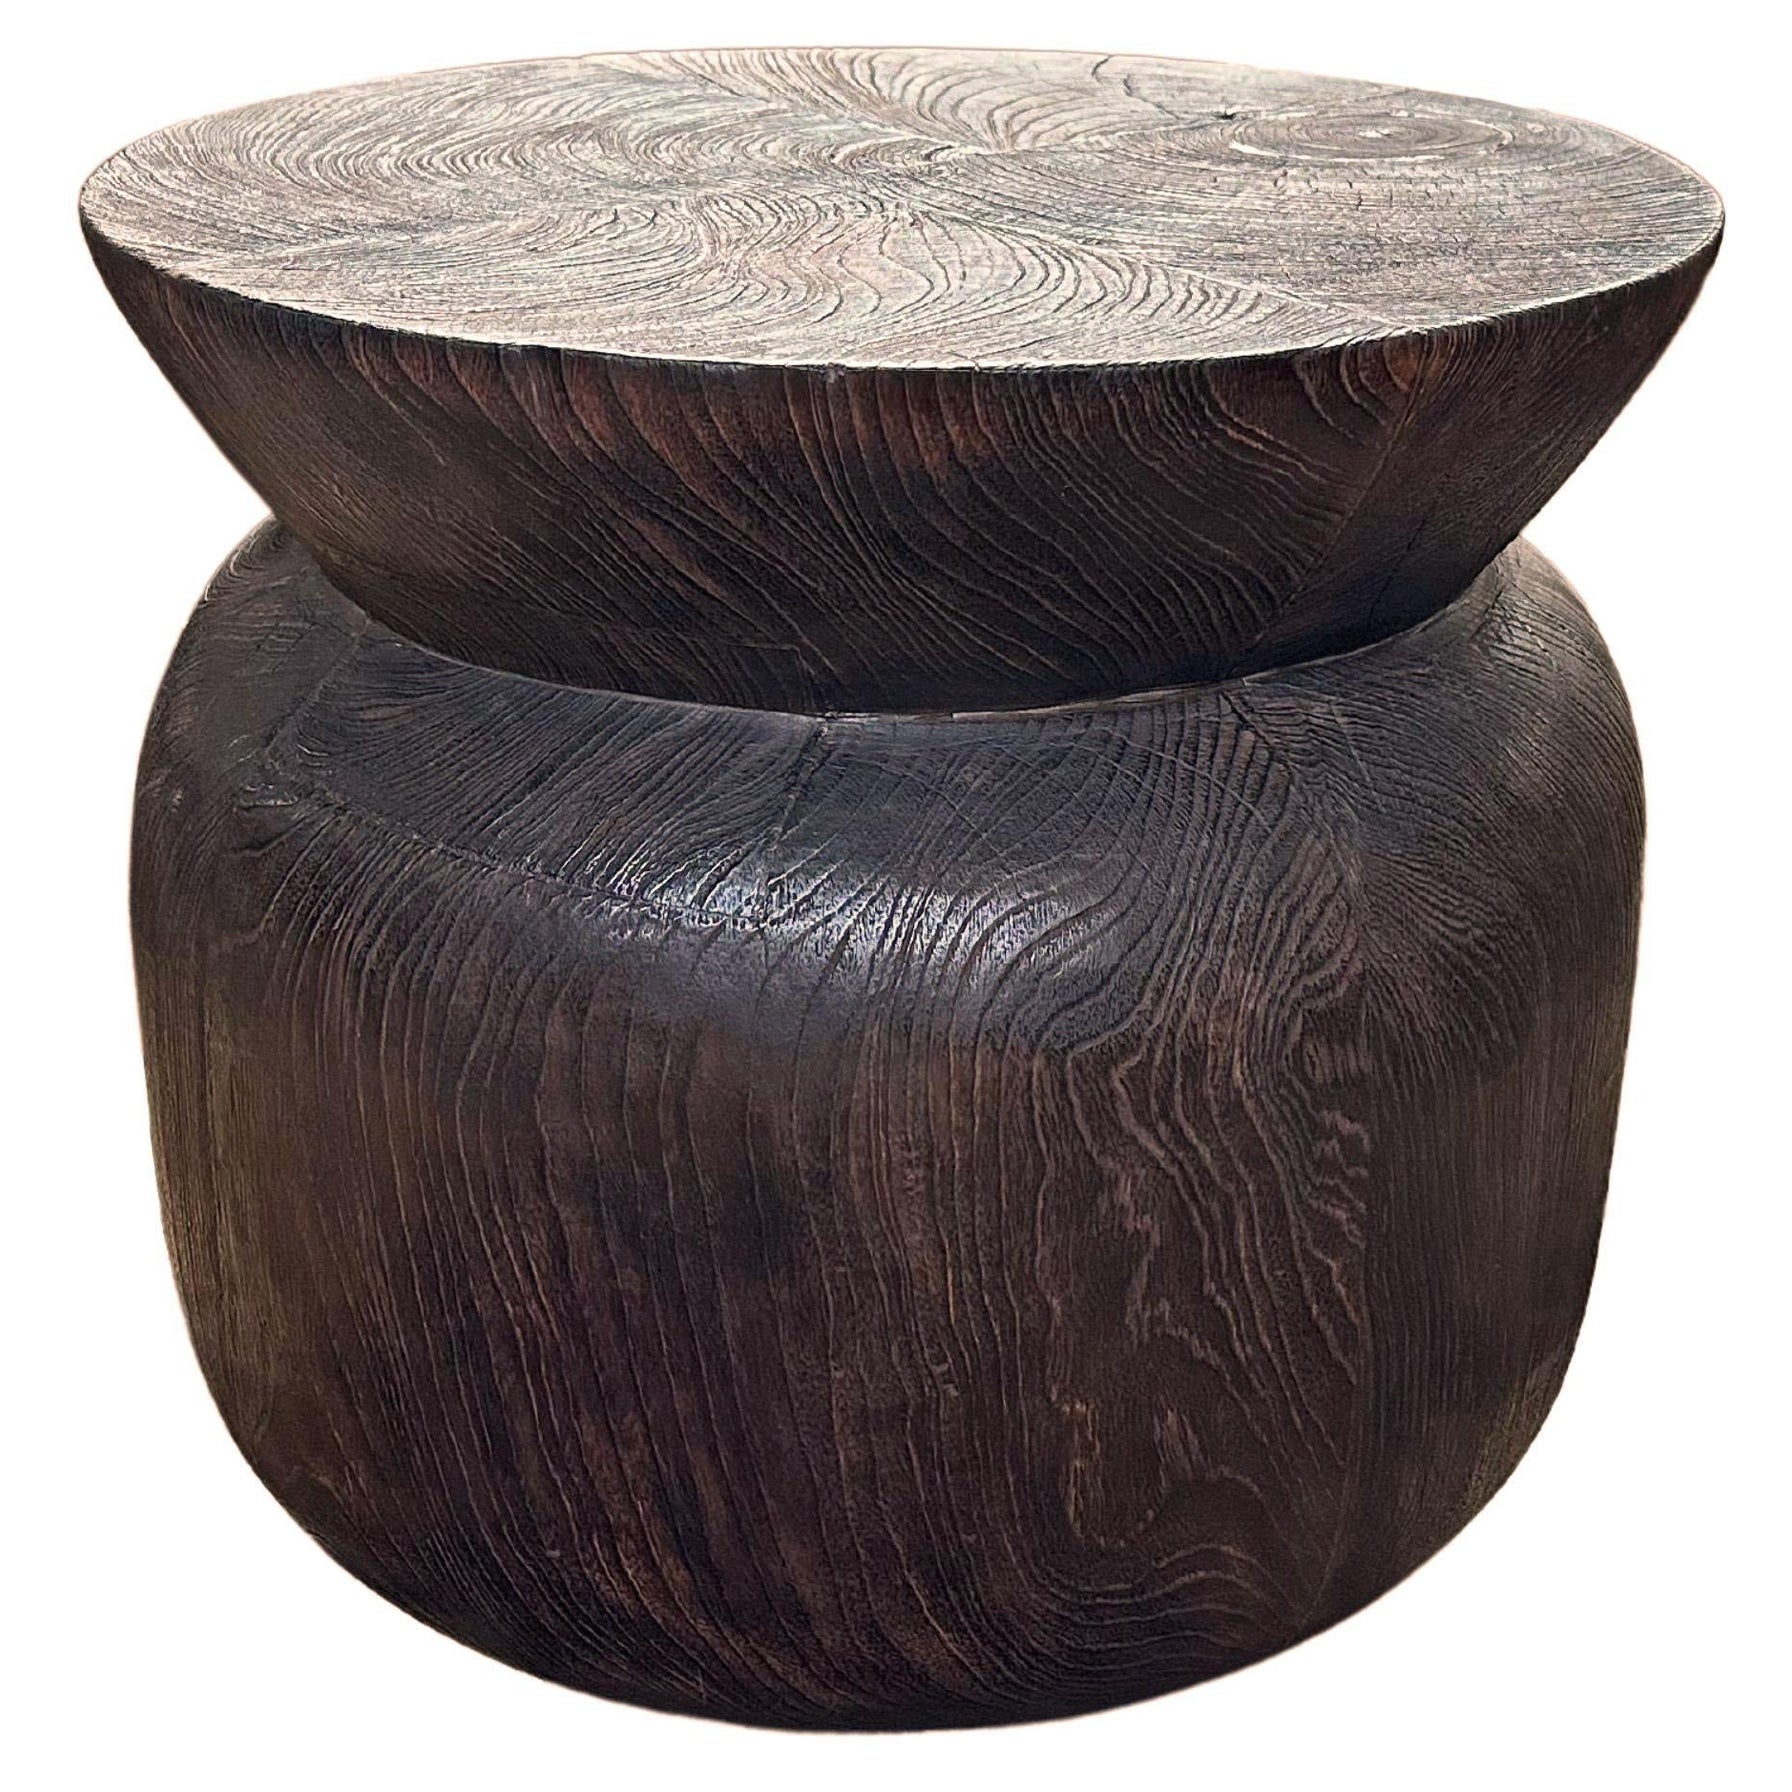 Sculptural Round Teak Wood Side Table, Burnt Finish, Modern Organic